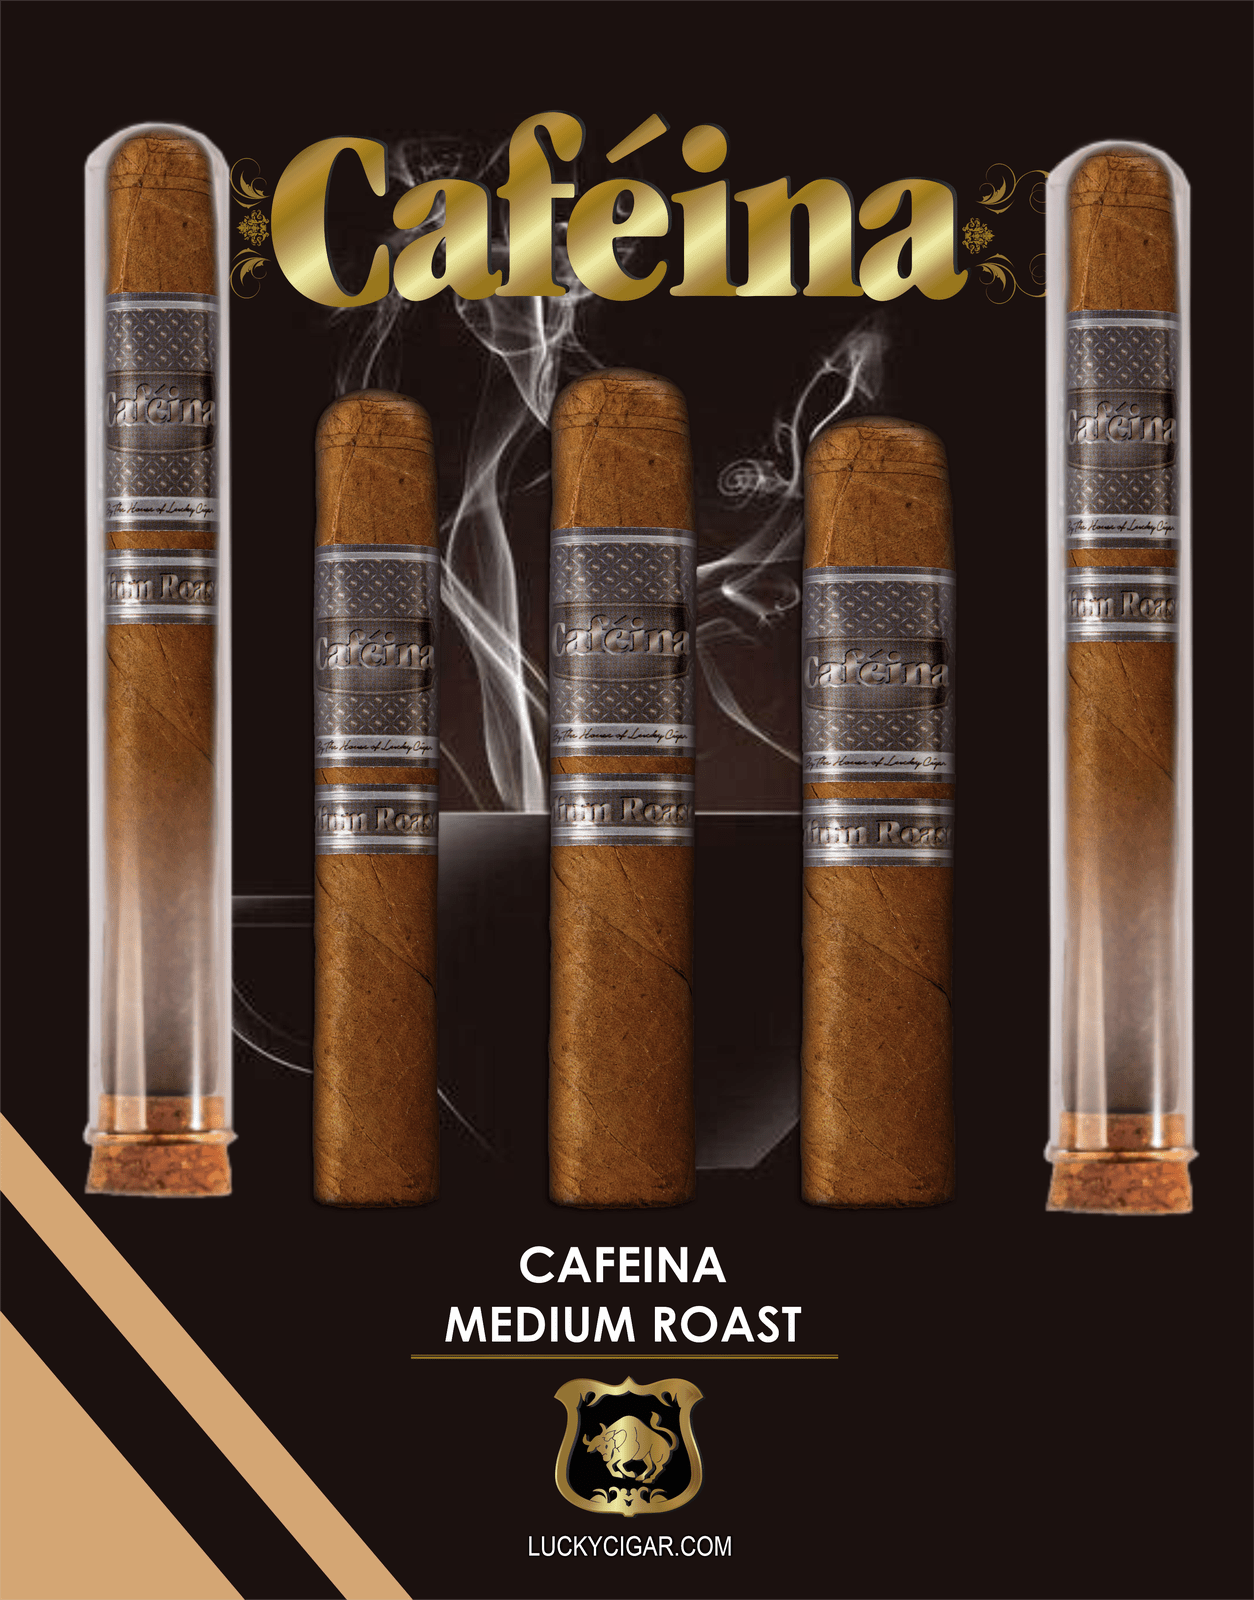 Infused Cigars: Set of 5 Cafeina Medium Roast Cigars - 3 Magnum 5x58 and 2 Toro in Crystal 6x52